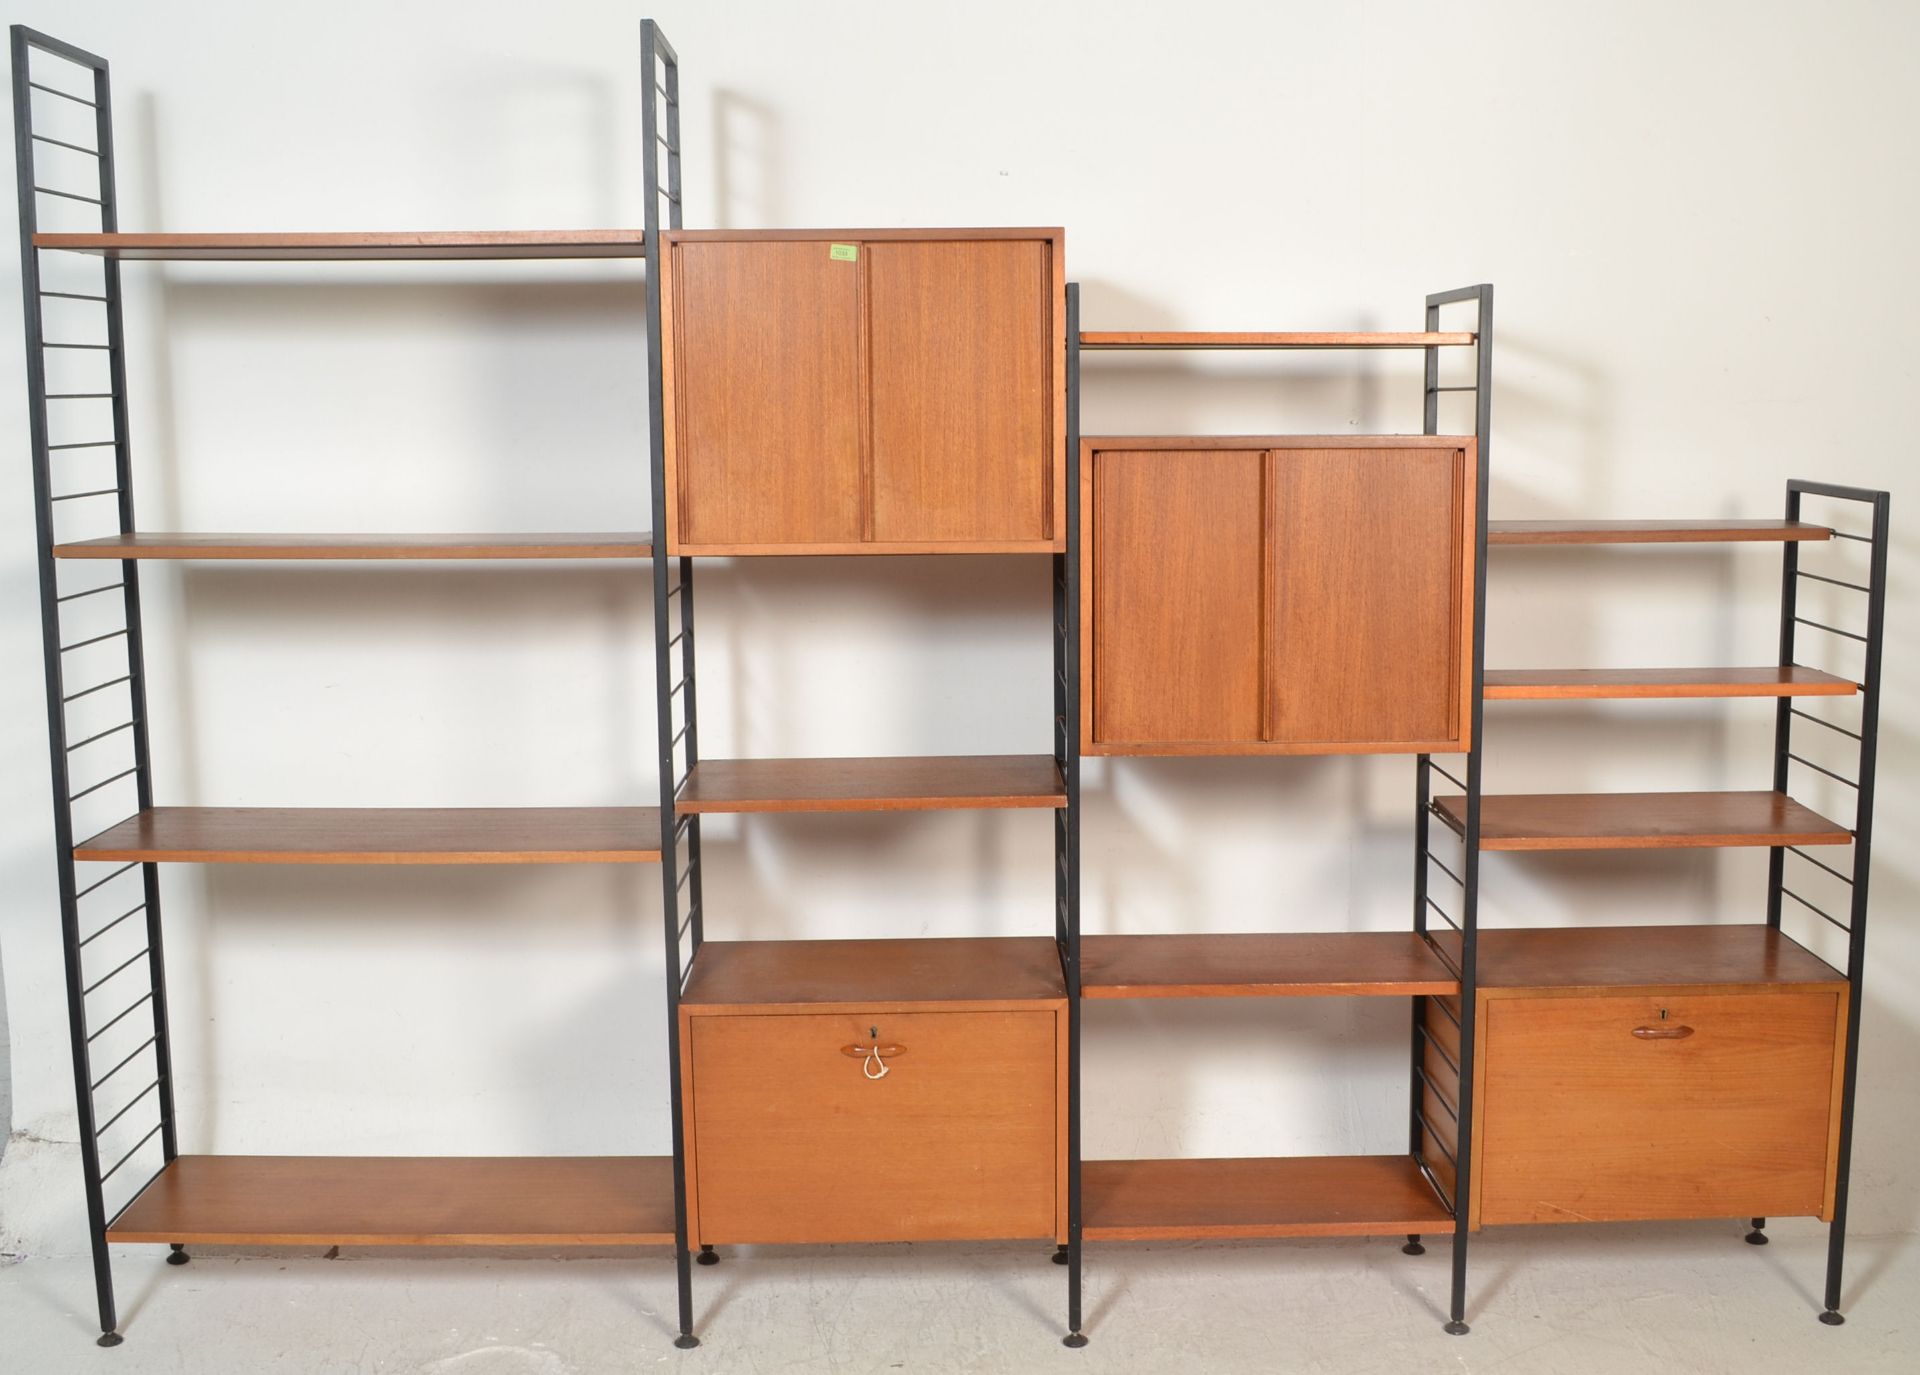 Staples - Ladderax - A 1970's retro vintage teak wood four bay modular wall shelving unit / room